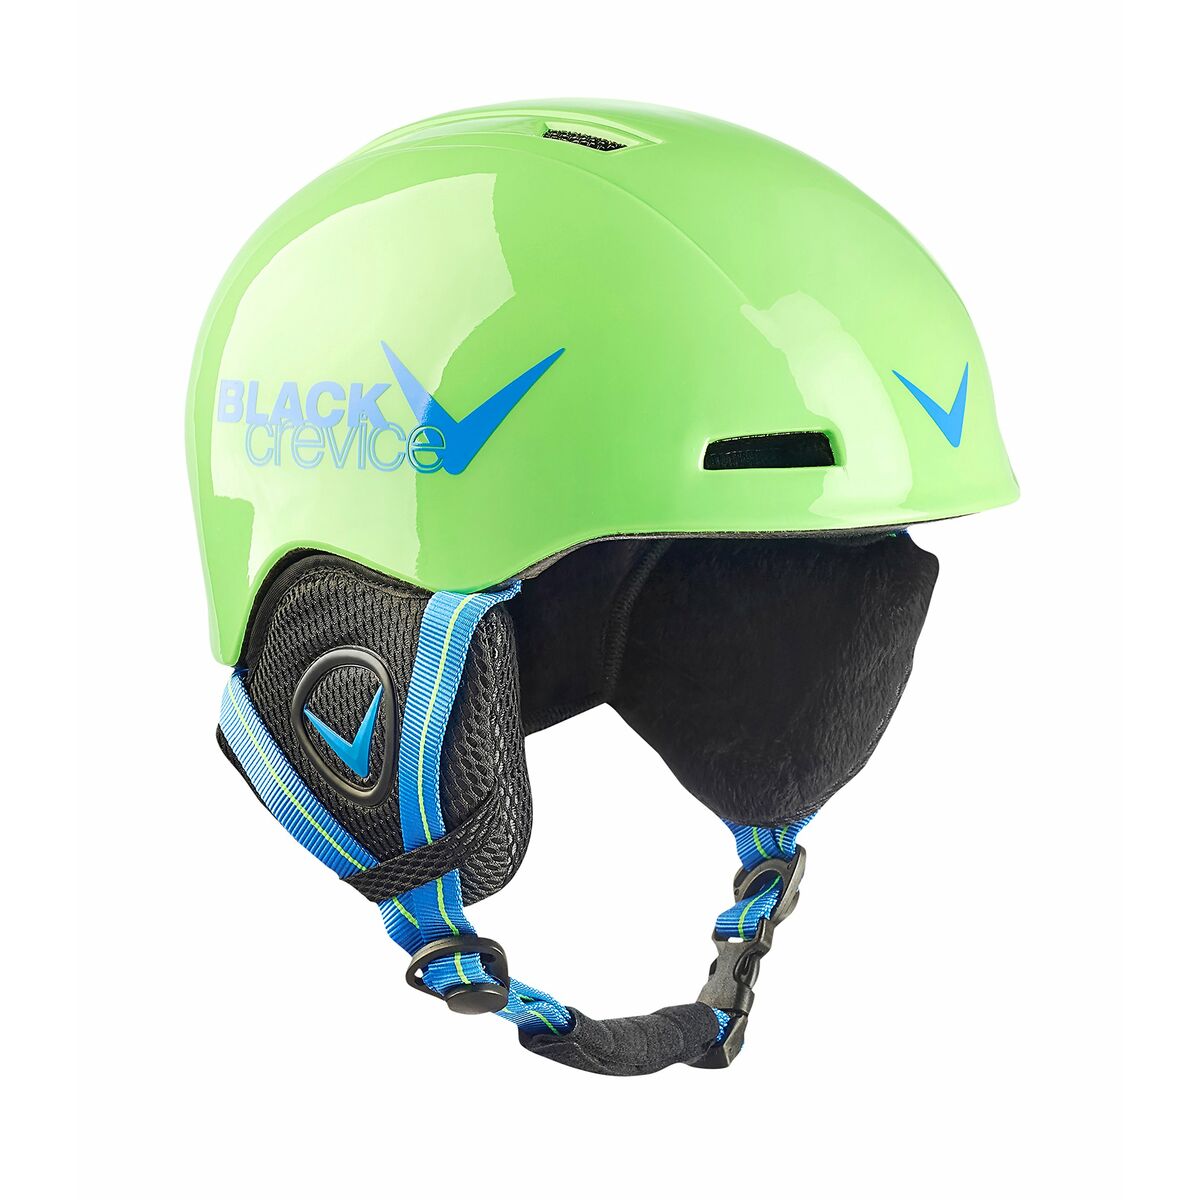 Ski Helmet Black Crevice 48-52 cm Green (Refurbished A)